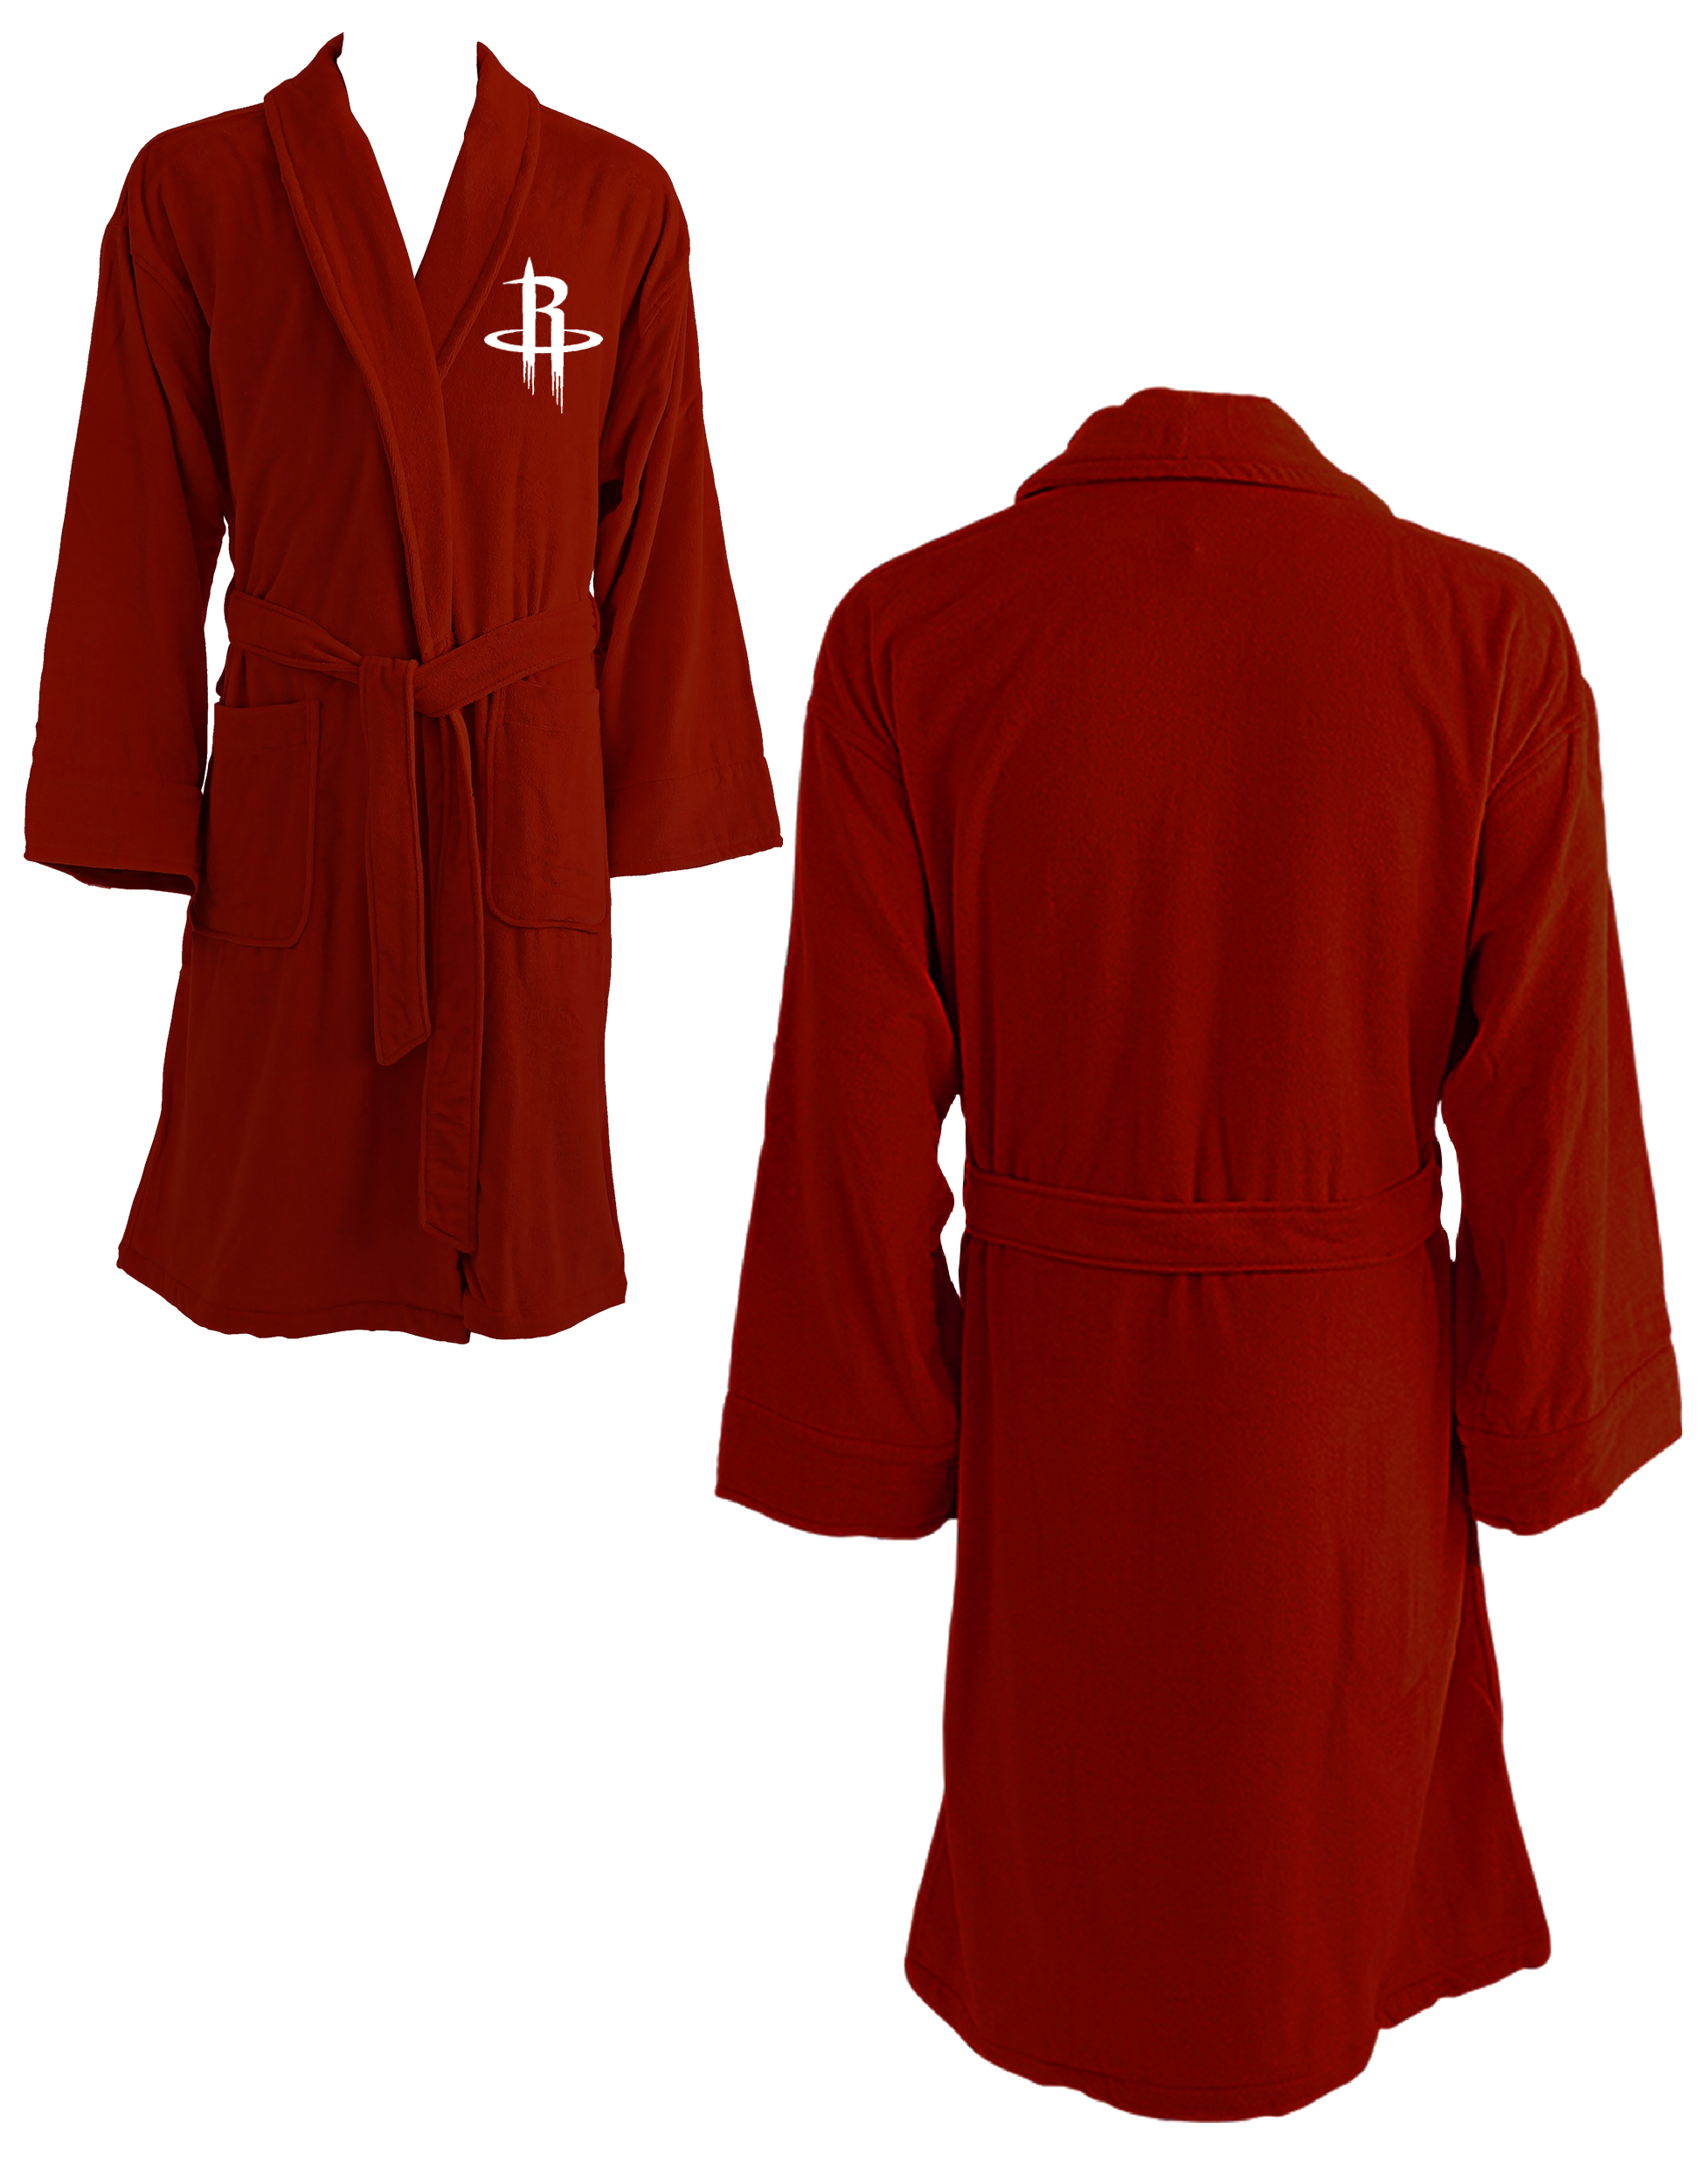 houston rockets robe